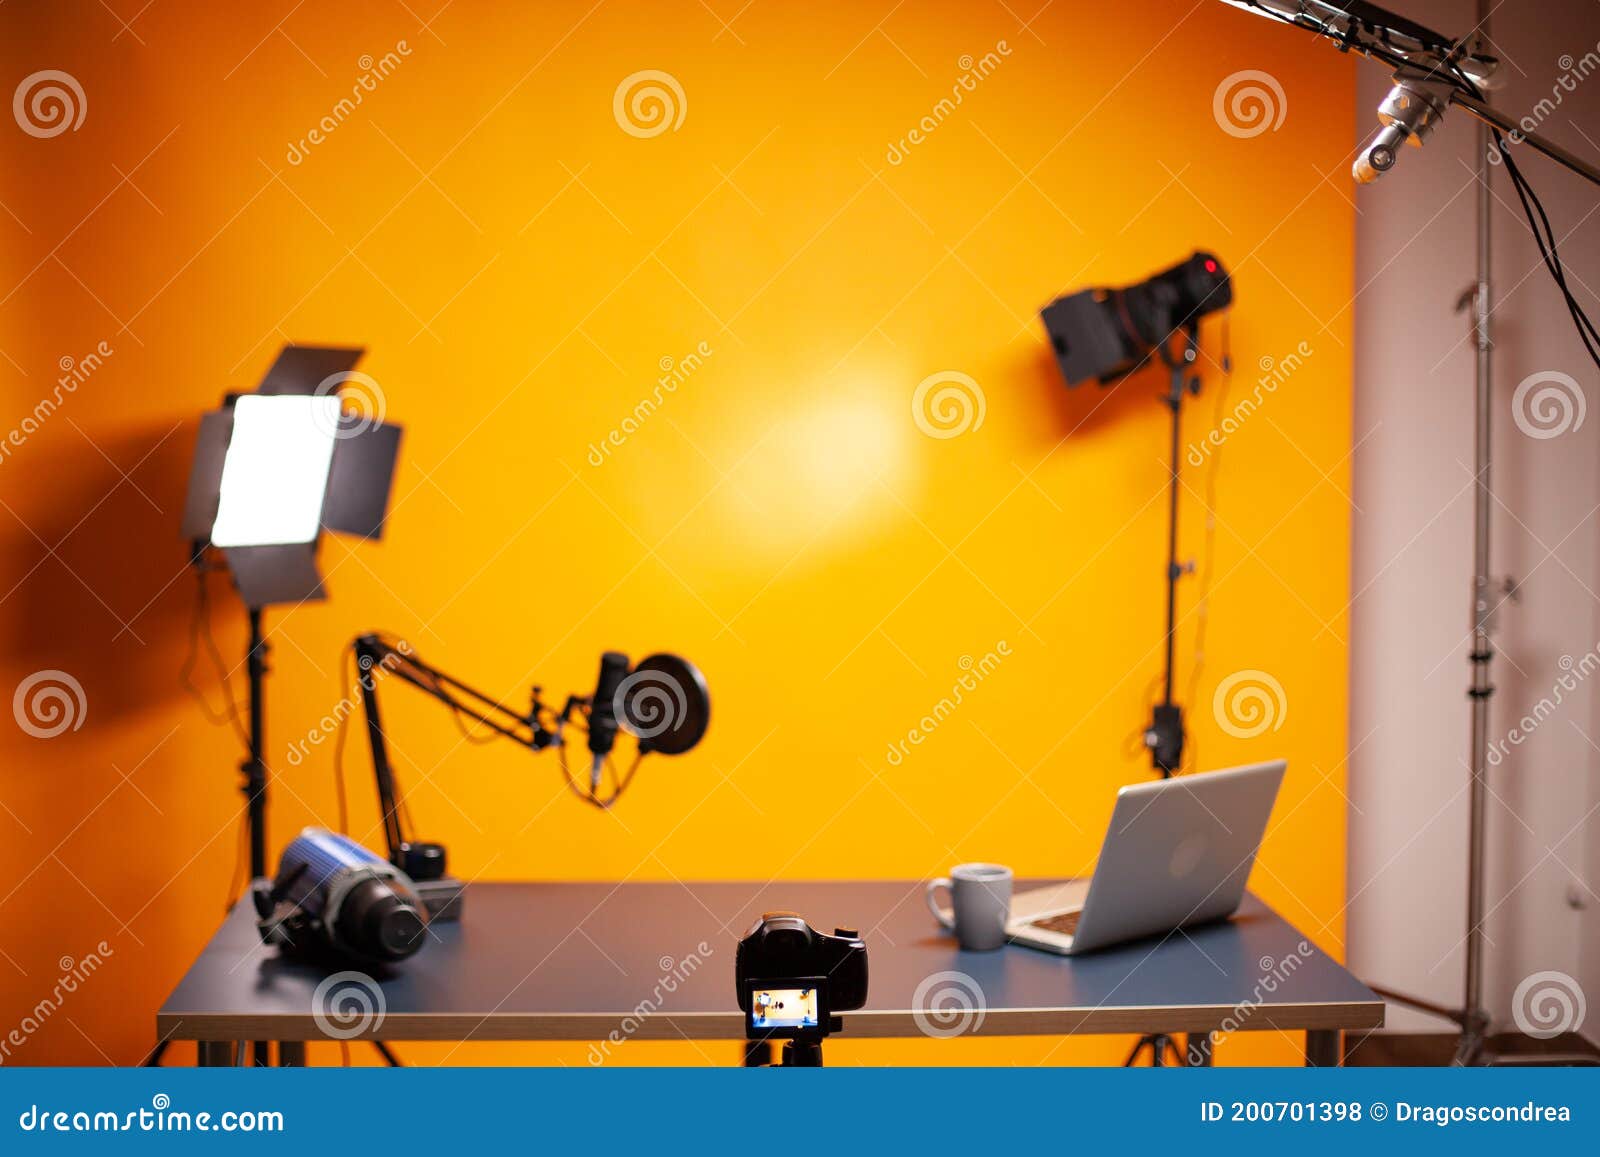 Professional Podcast and Vlogging Setup Stock Photo - Image of live, blog:  200701398